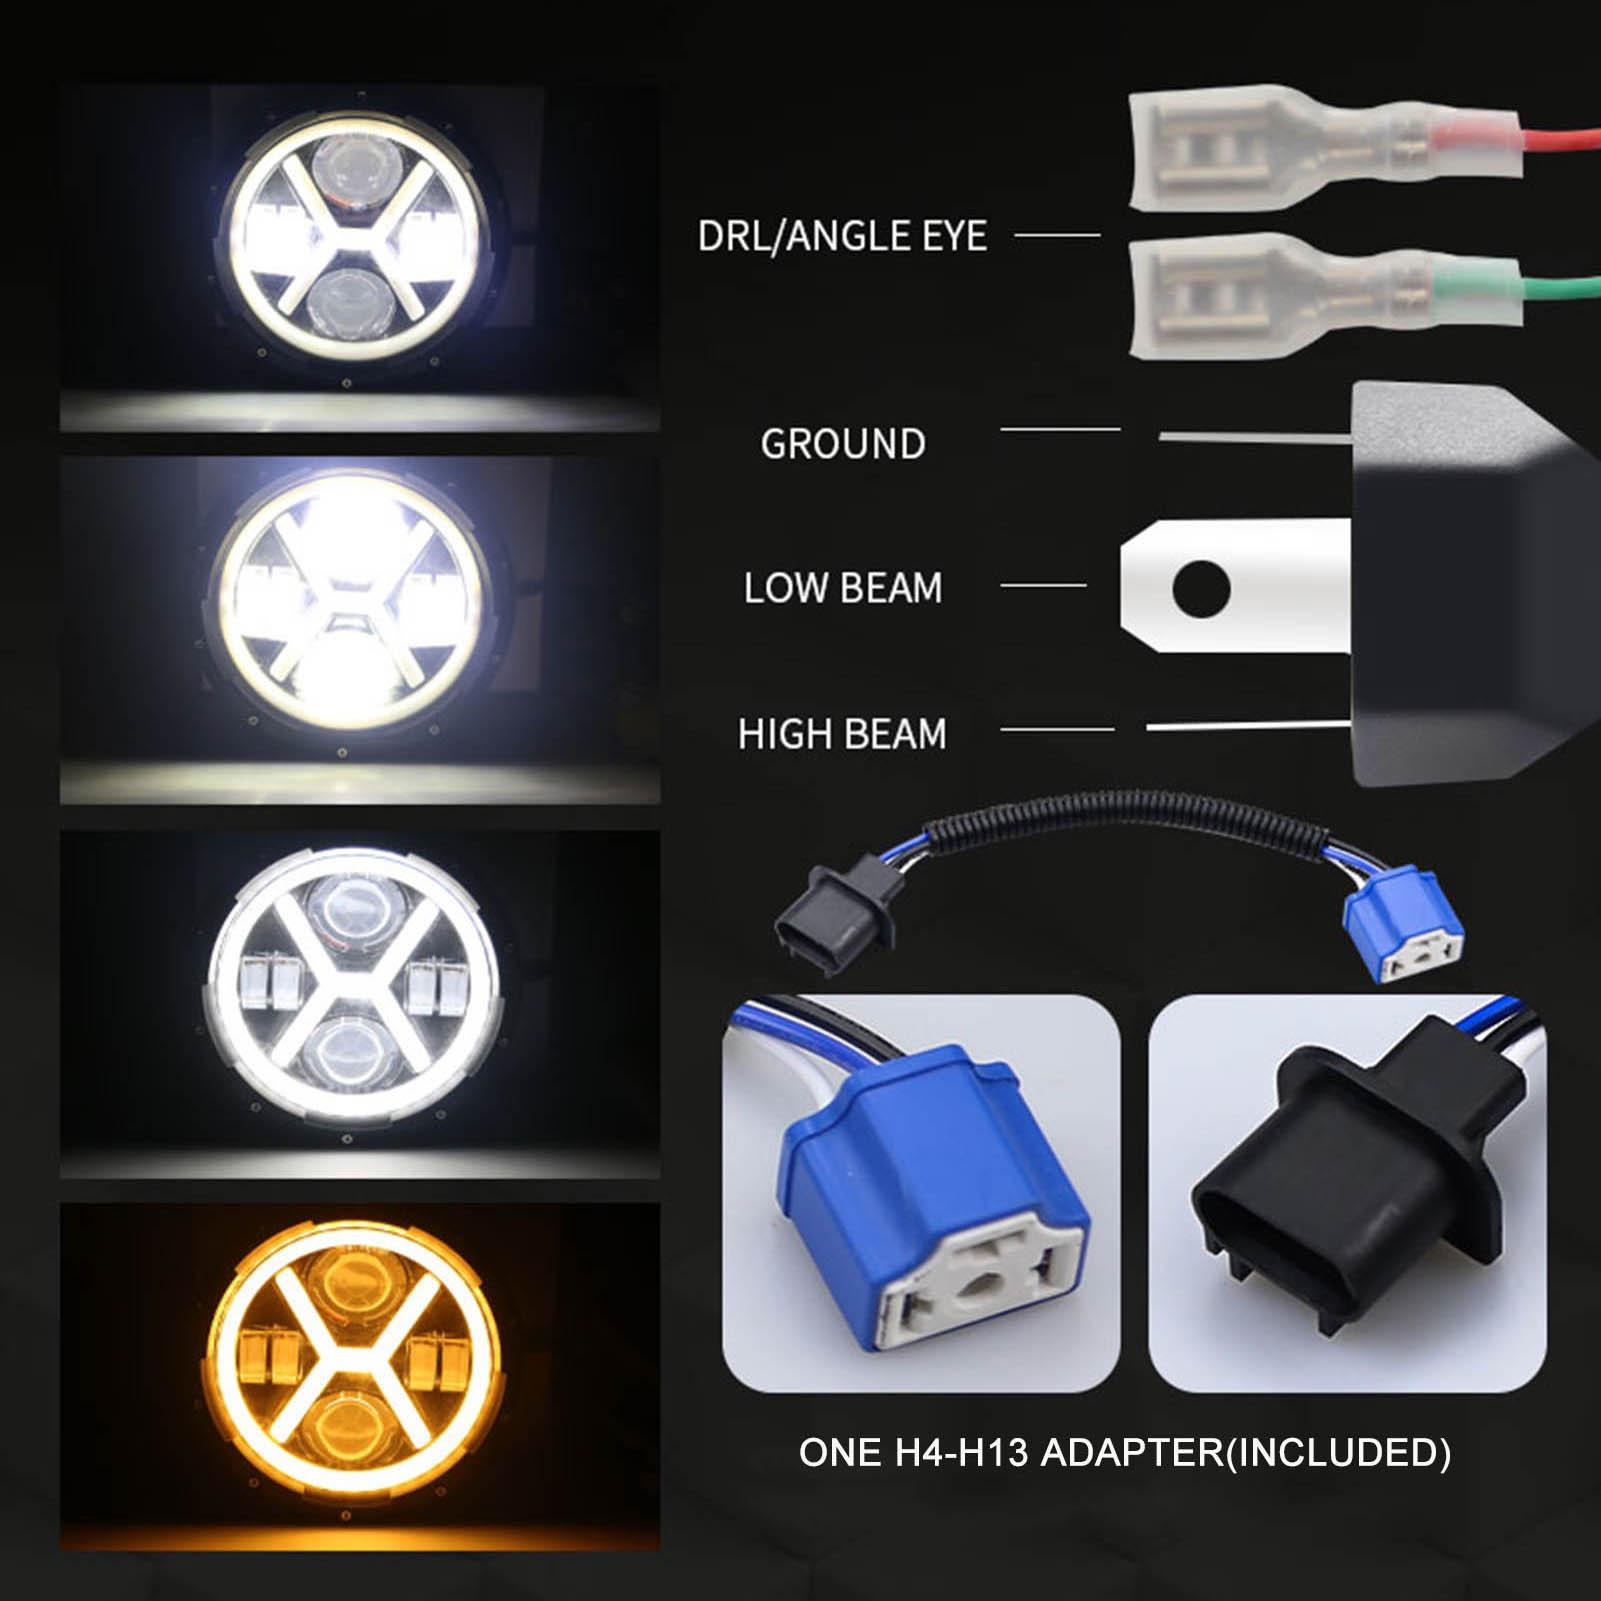 1PCS 7in Round LED Projector Headlight X-Type Hi/Lo Beam Super Bright Headlamp Replacement for Jeep Wrangler JK JKU CJ